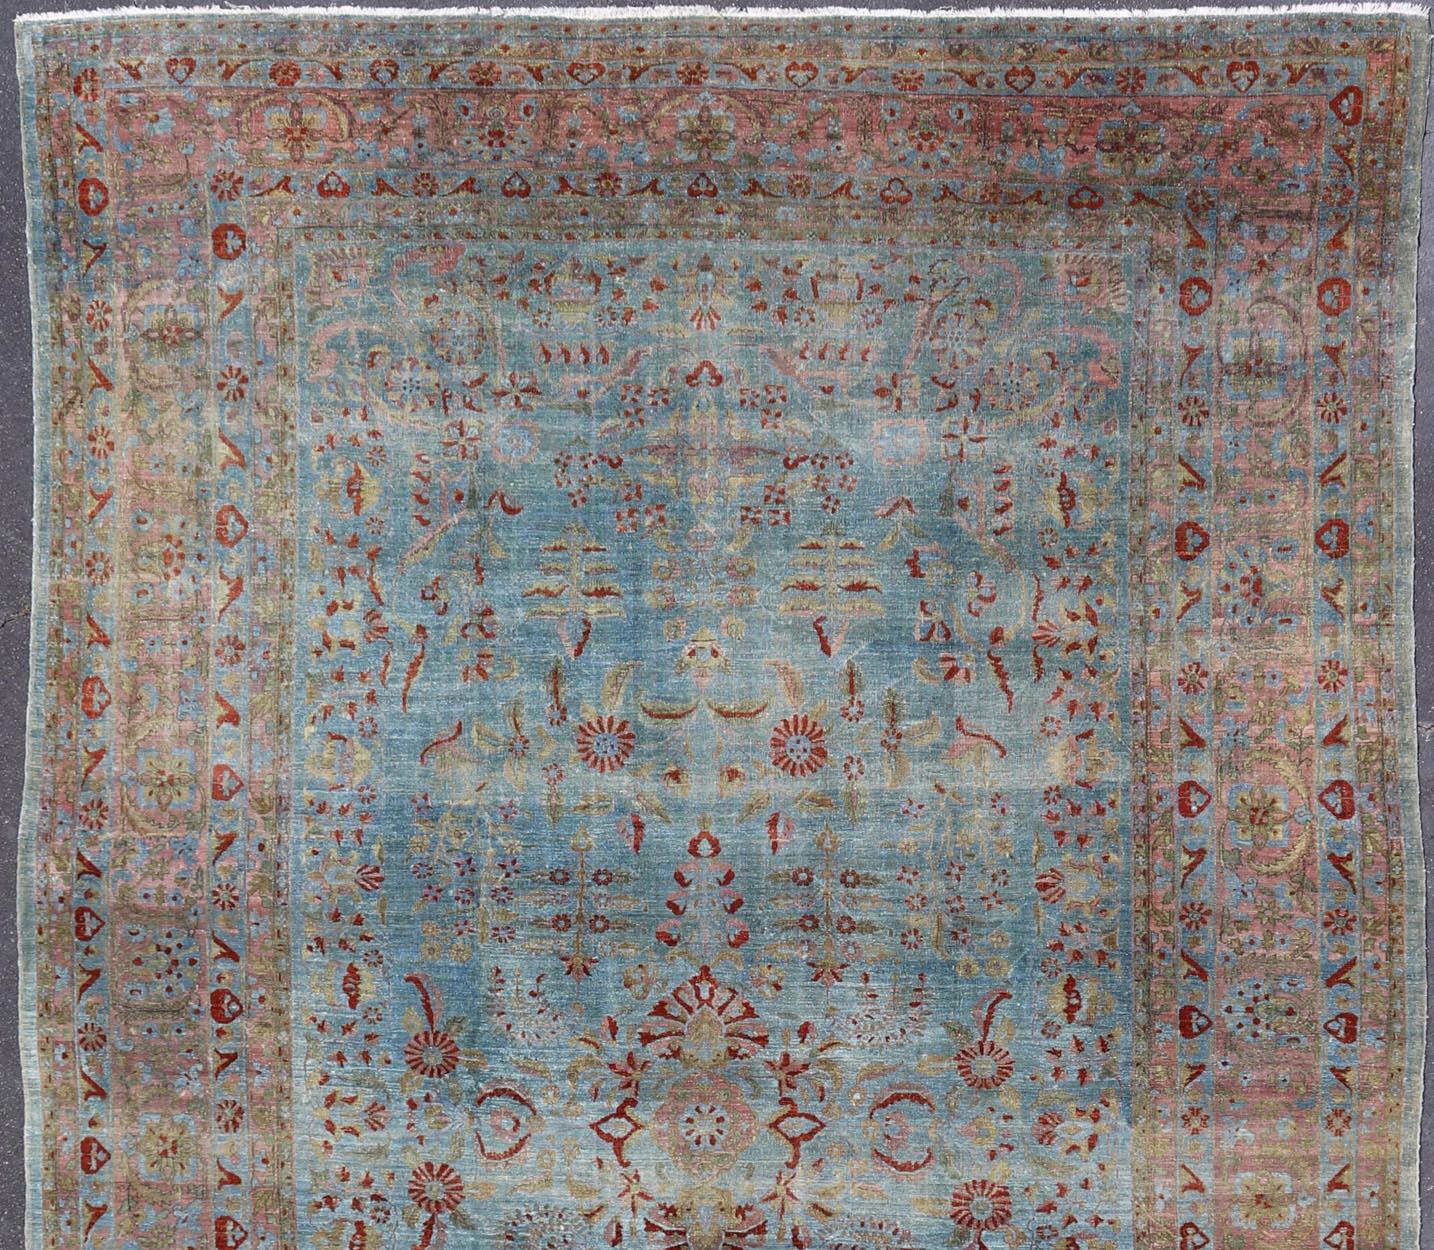 Blue background antique Persian Sarouk rug with red and acid green florals. Keivan Woven Arts / rug L11-0305, country of origin / type: Iran / Sarouk Farahan, circa 1910. 
Measures: 10'11 x 17'2
This outstanding antique Farahan Sarouk carpet (circa